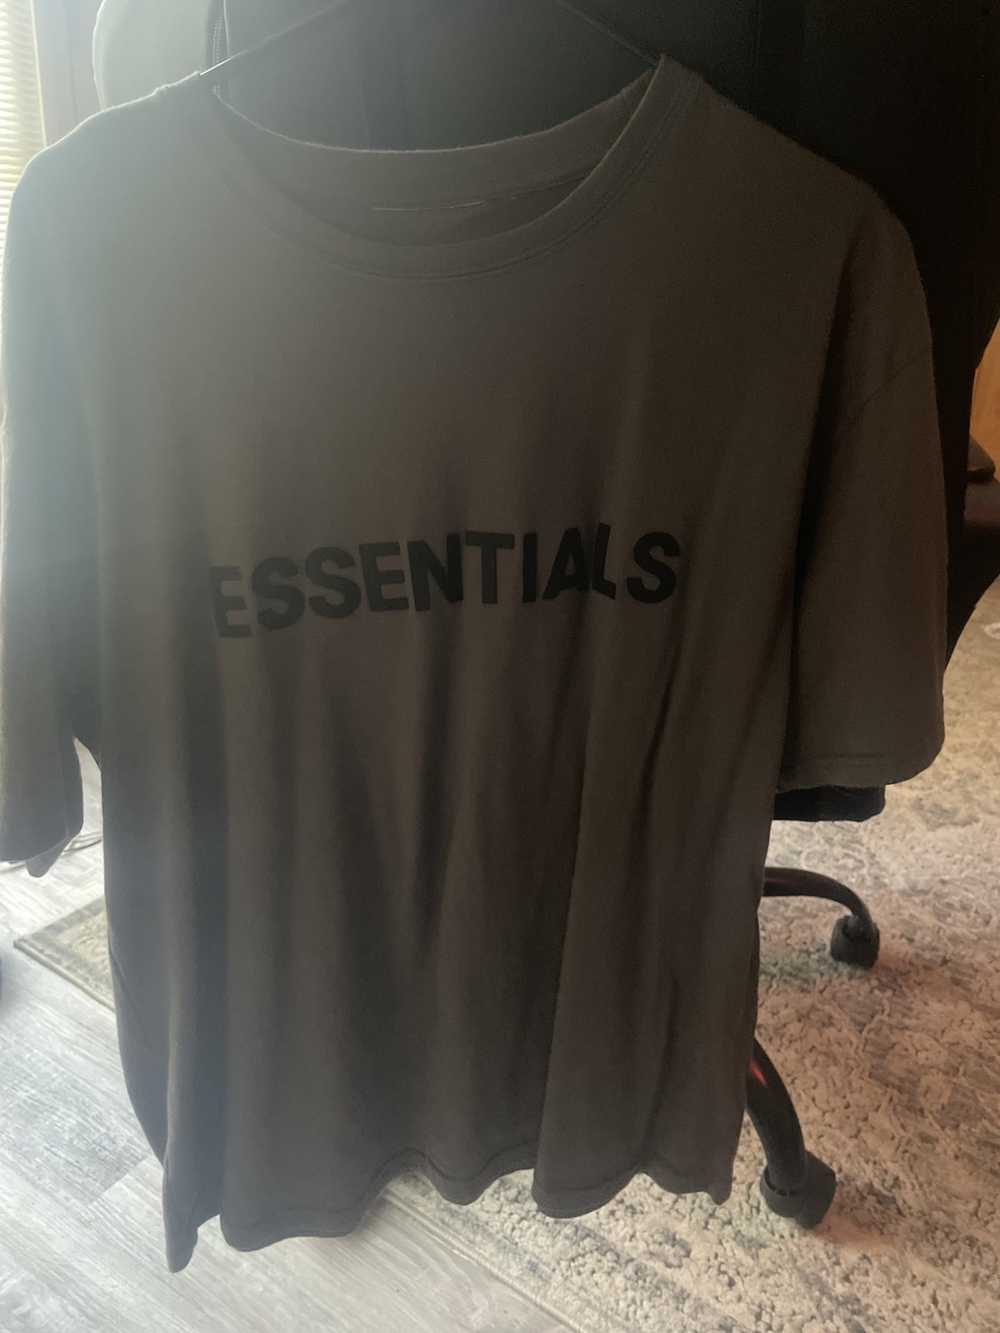 Essentials Essential t shirt - image 1